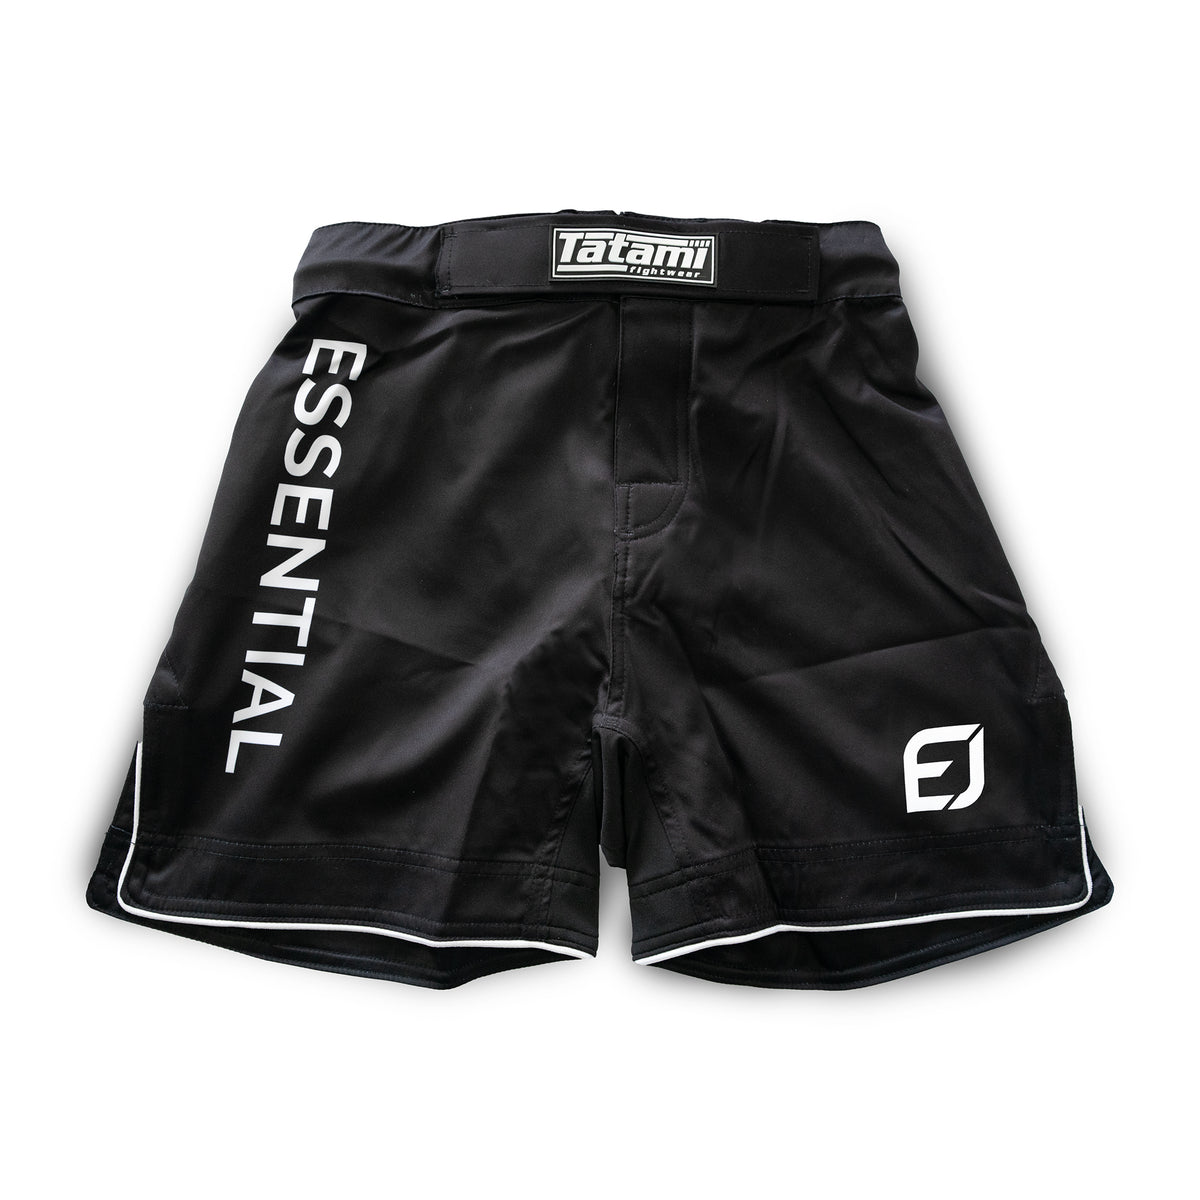 EJ Fight Shorts - Black